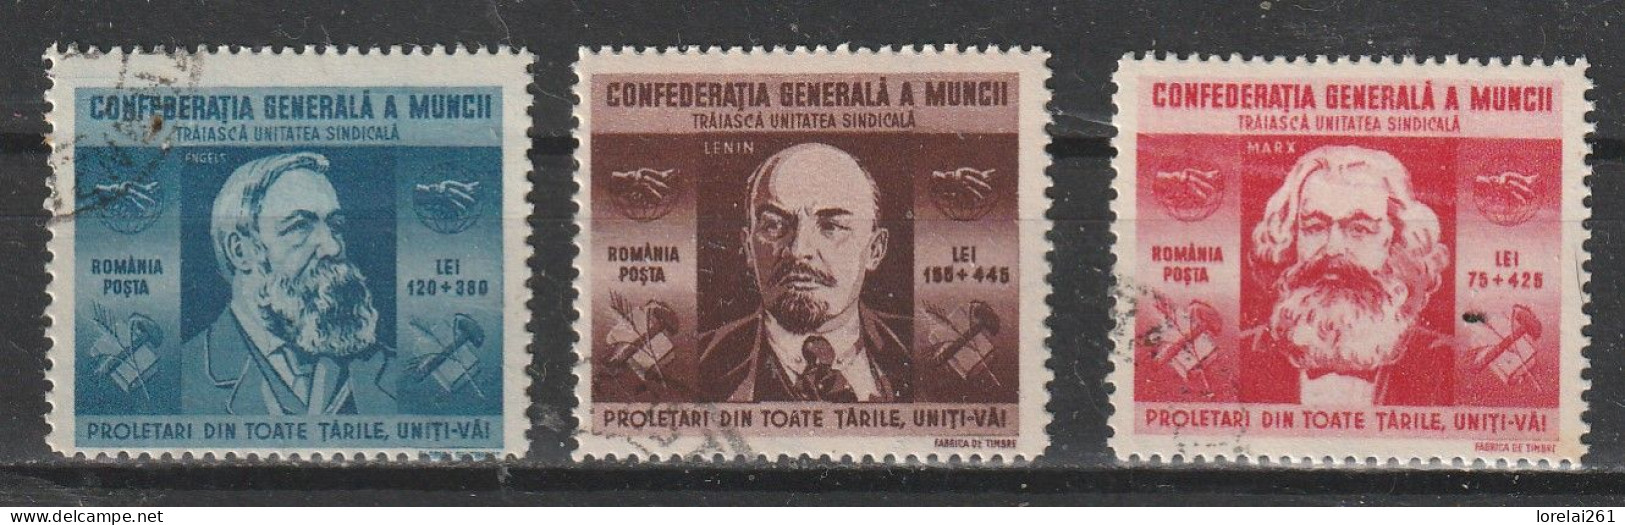 1945 - Confédération Générale Du Travail Mi No 861/863 - Usado